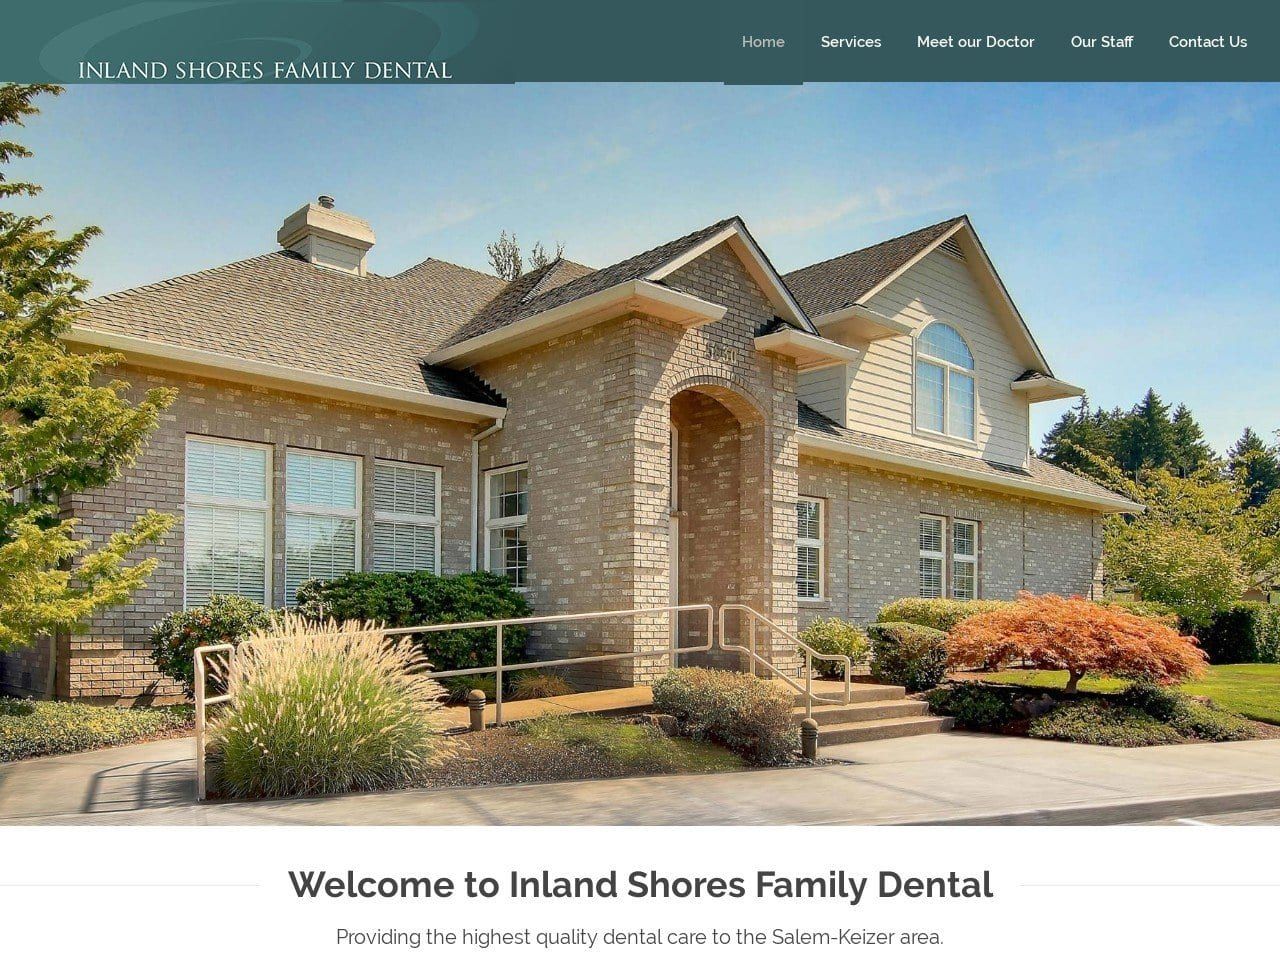 Inland Shores Dental Website Screenshot from inlandshoresfamilydental.com